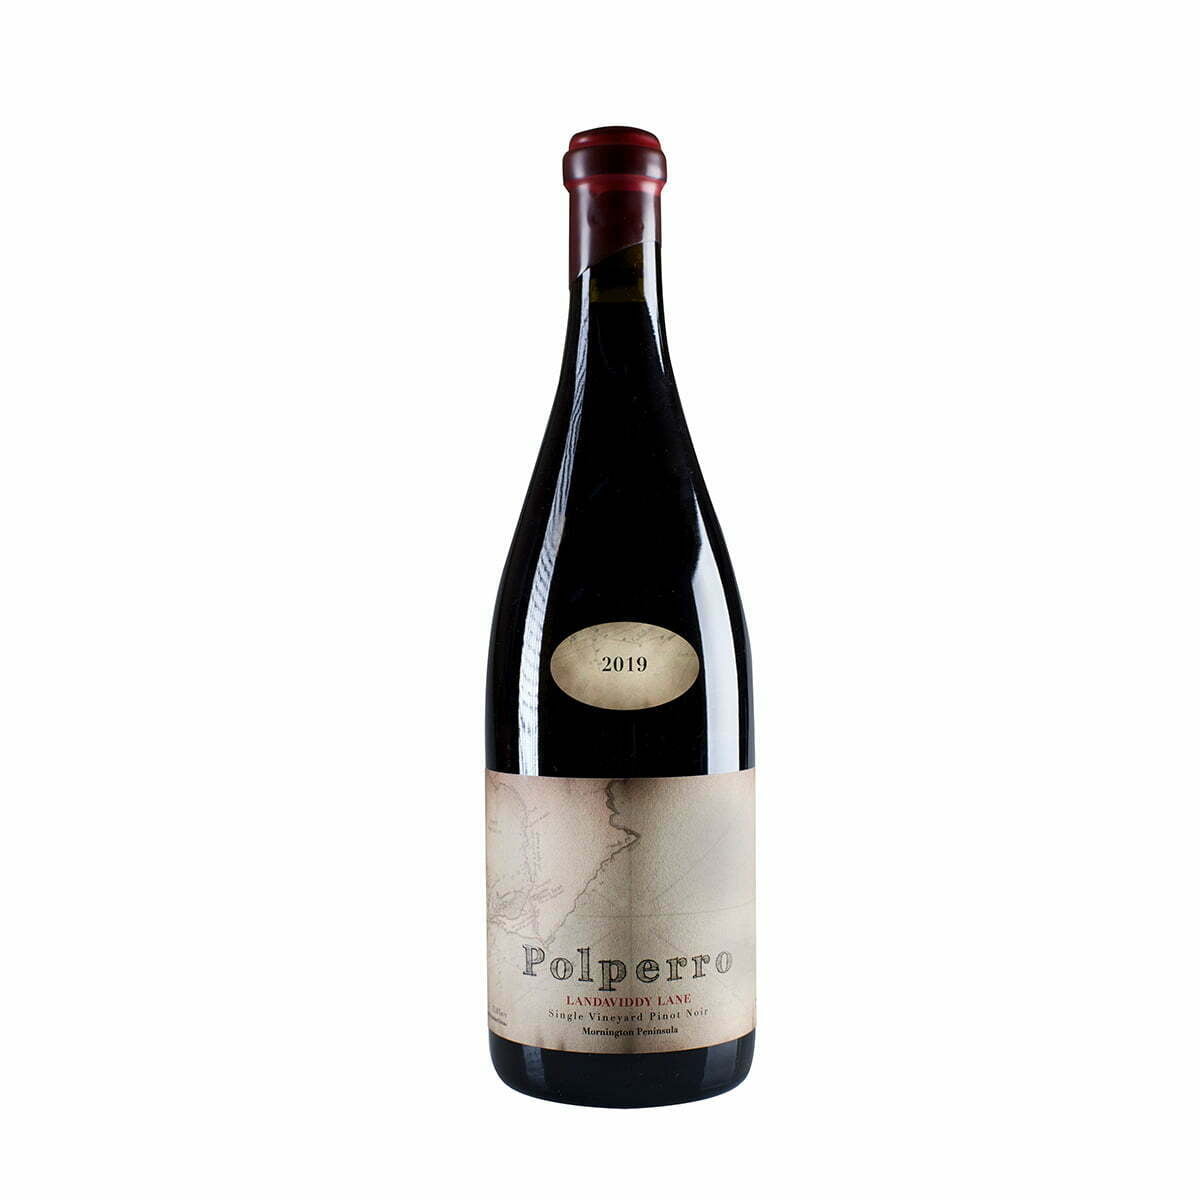 Polperro Landaviddy Lane Pinot Noir 2019